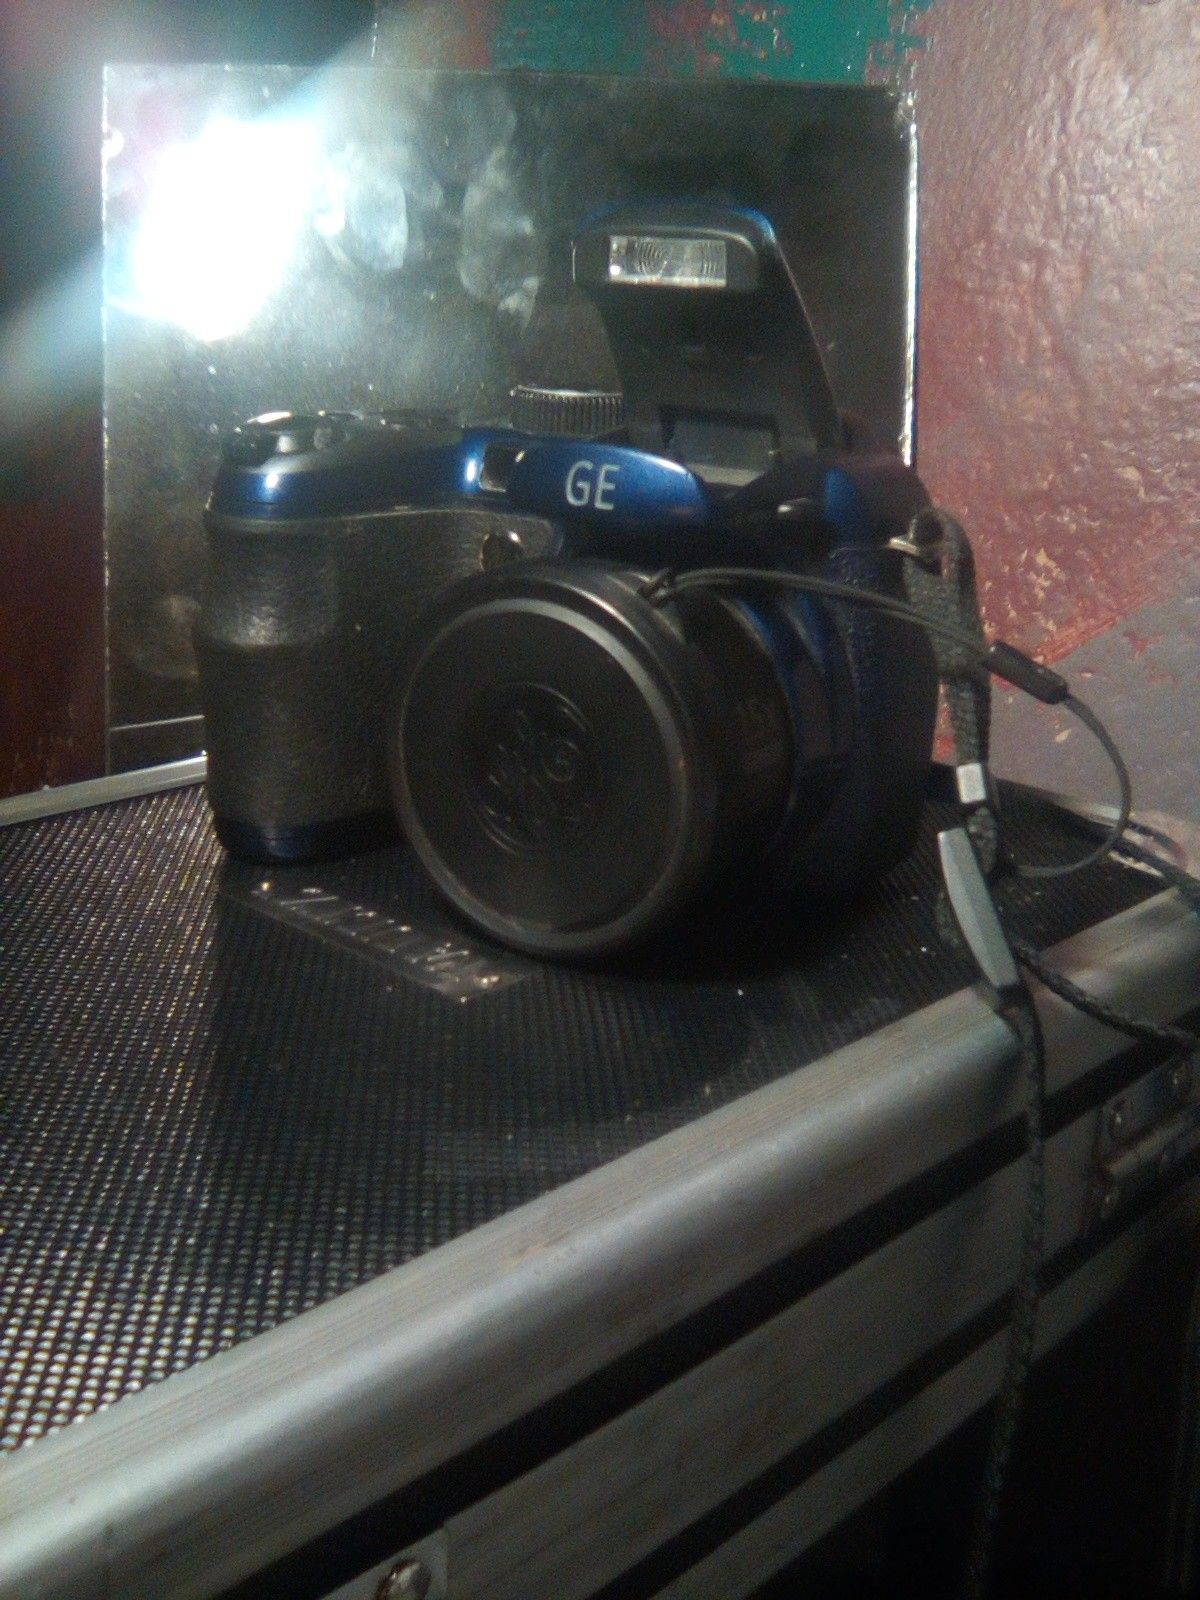 GE digital camera x500